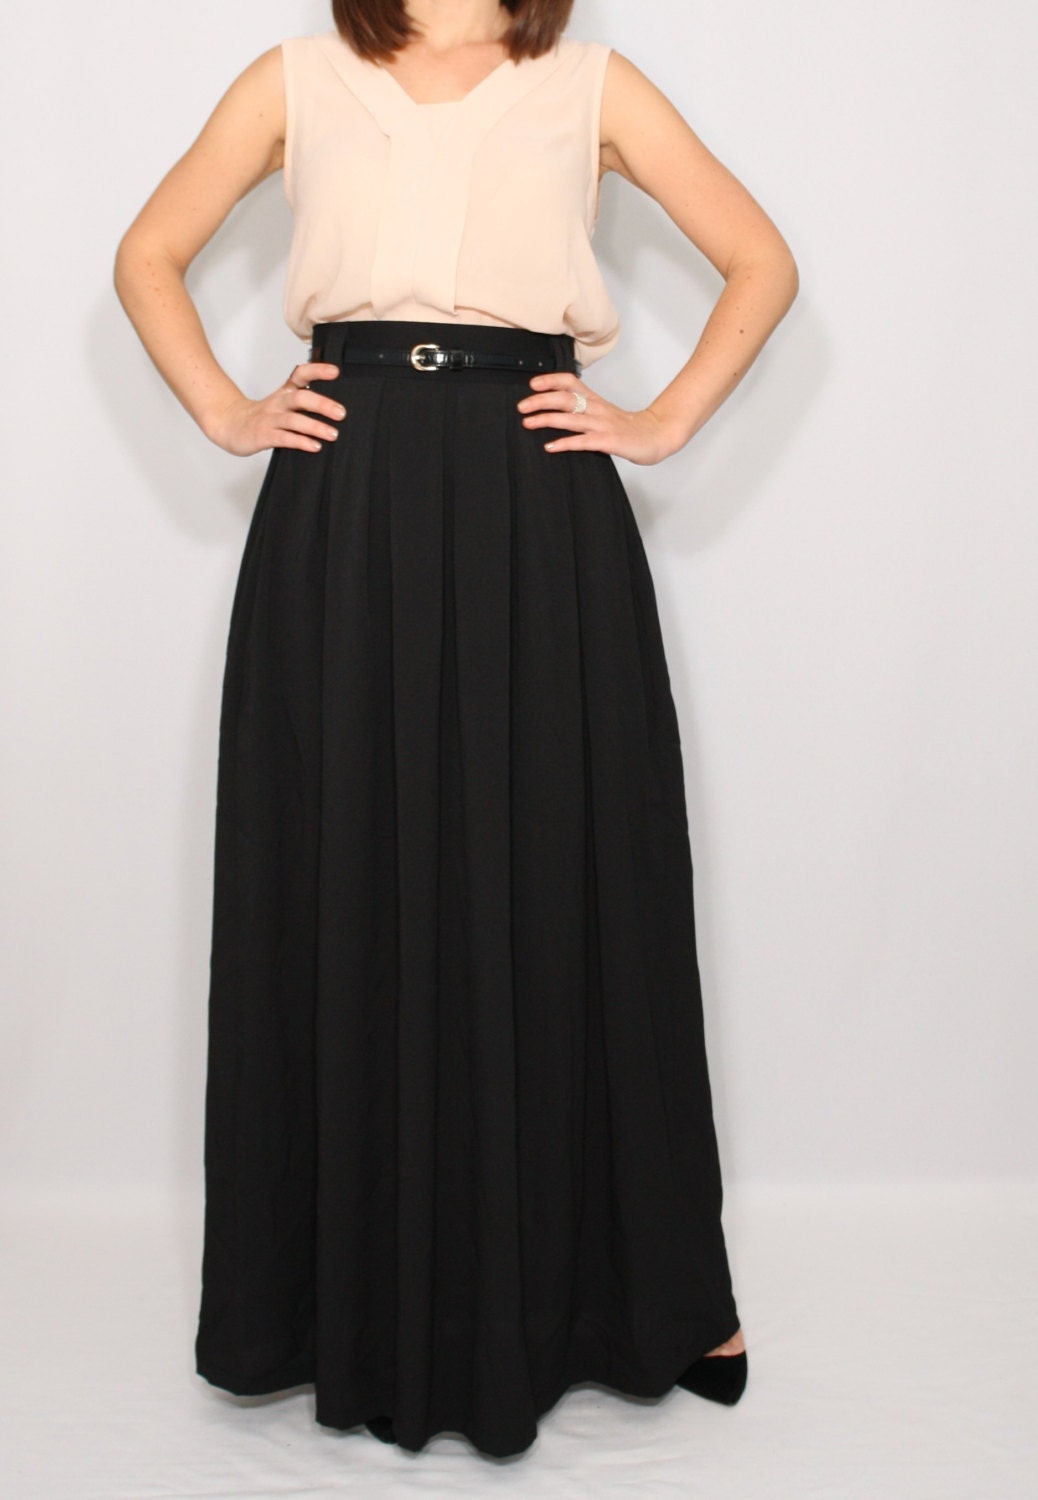 Black maxi skirt with pockets long black skirt chiffon maxi | Etsy